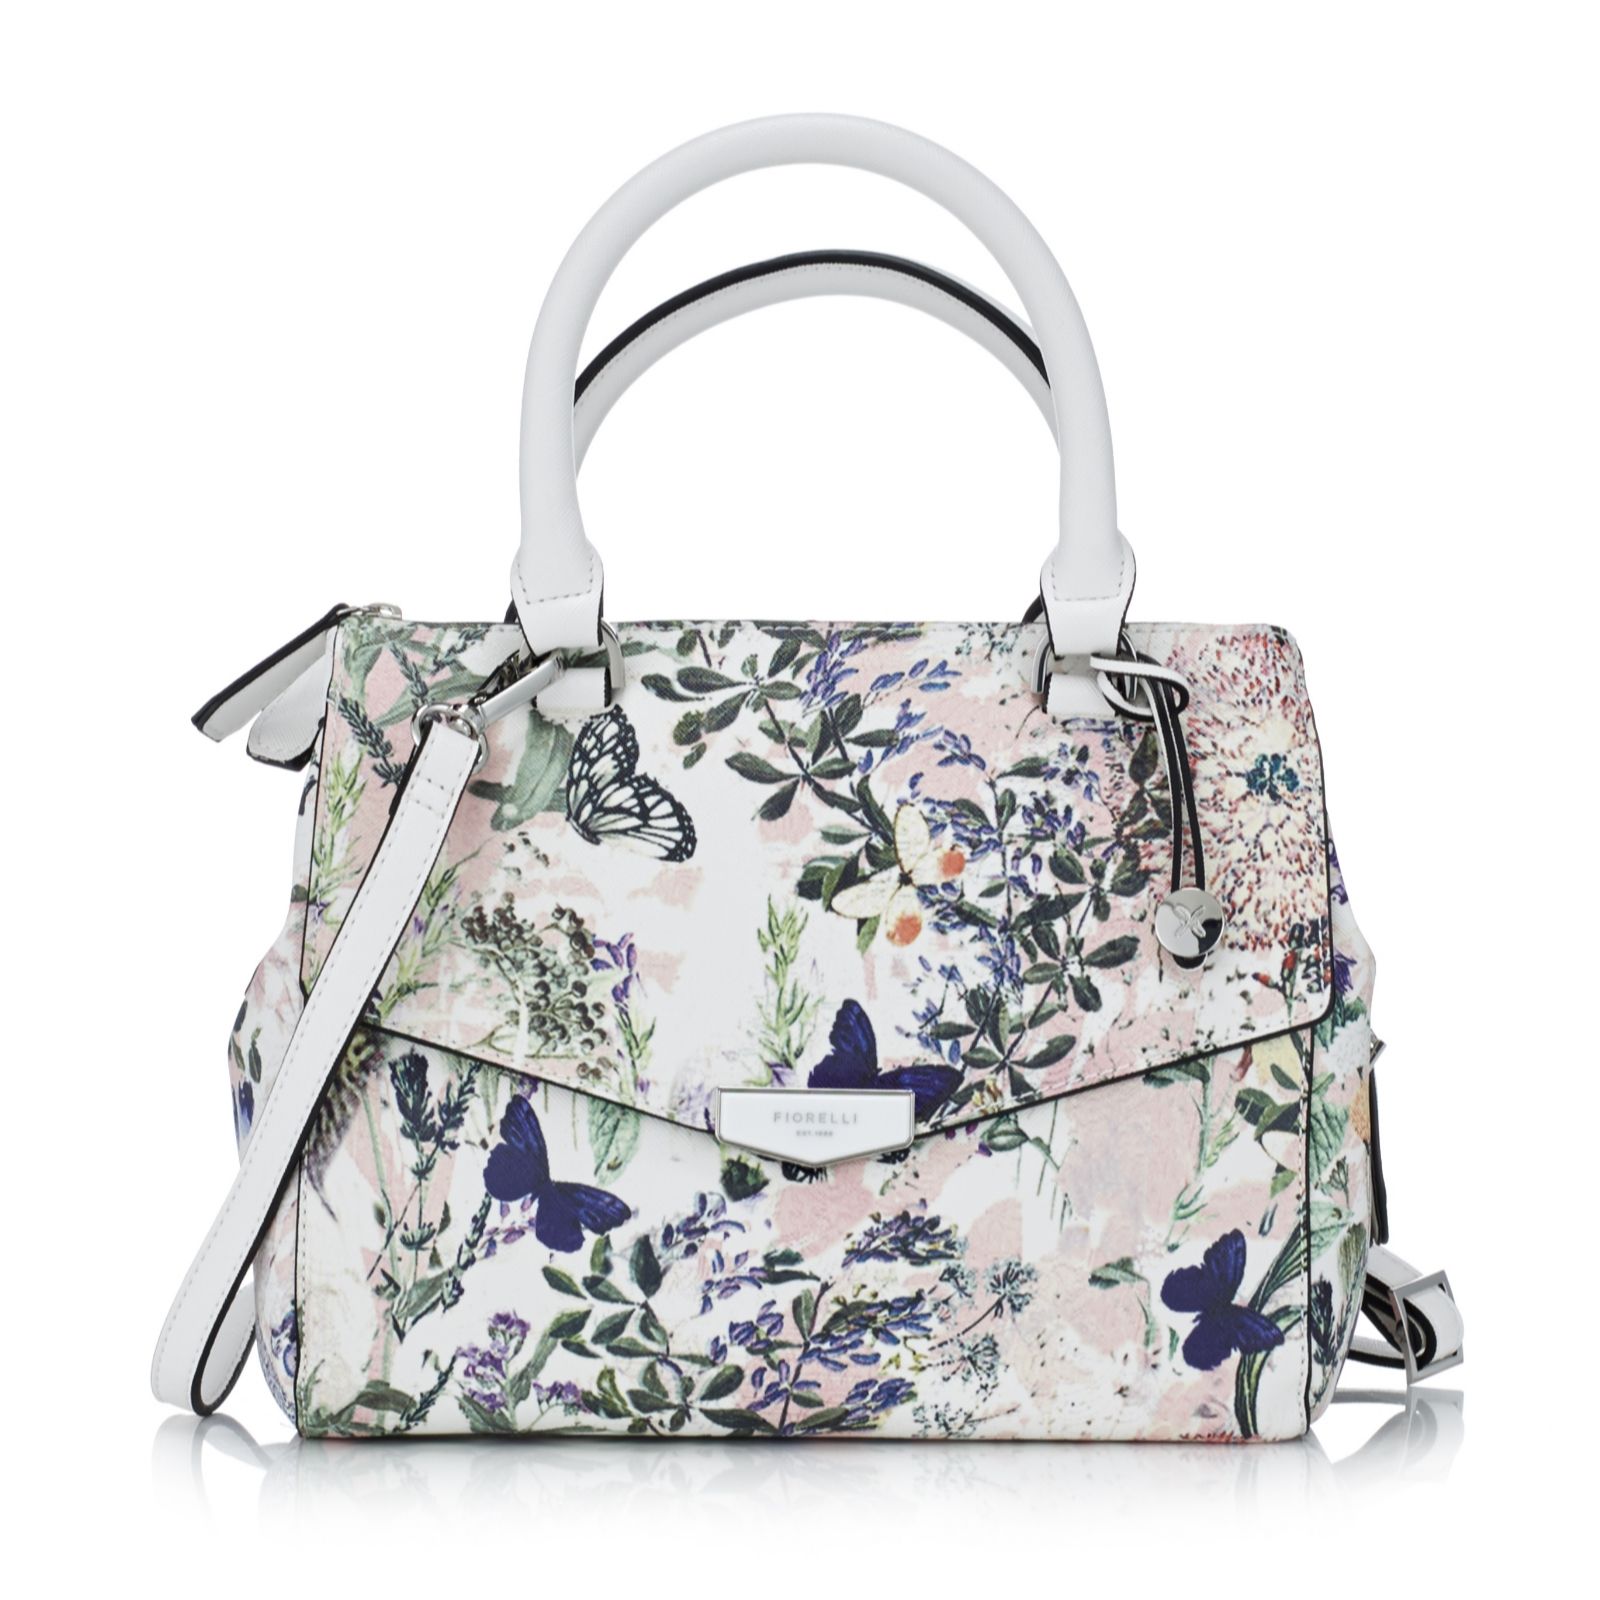 Fiorelli Mia Grab Bag - QVC UK